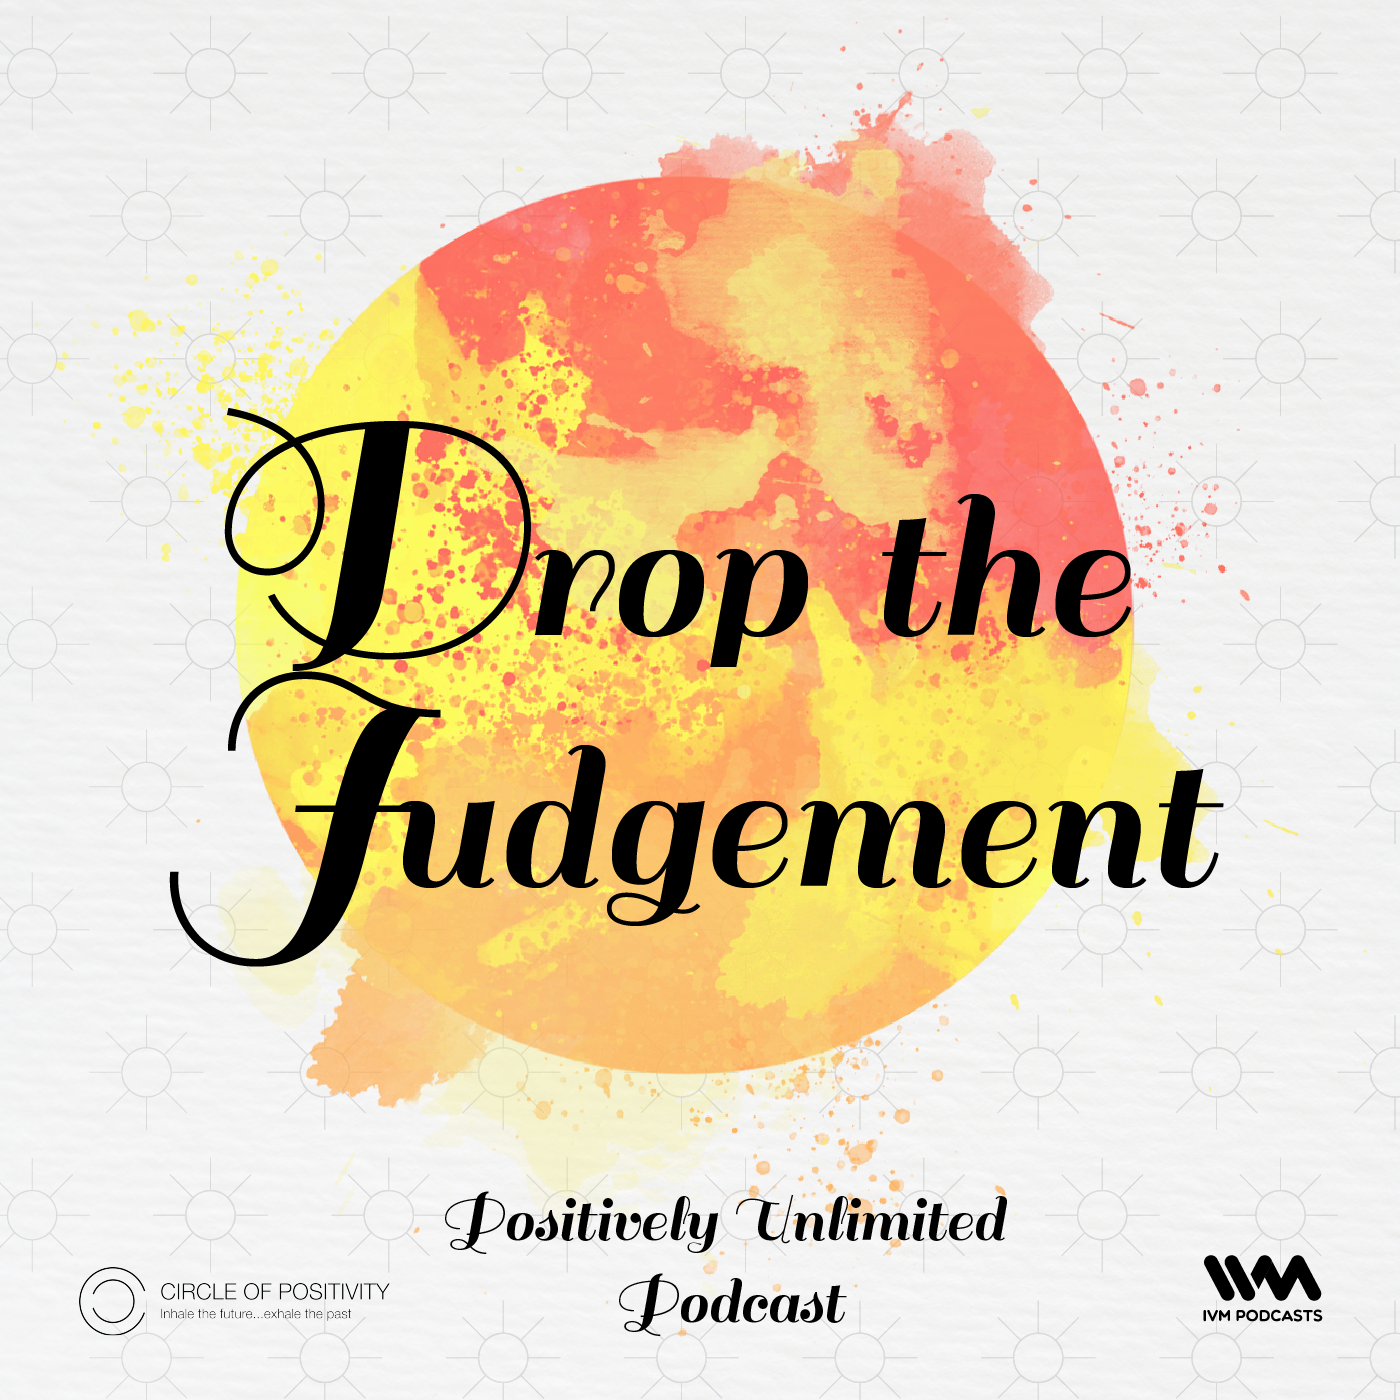 D for Drop the Judgement